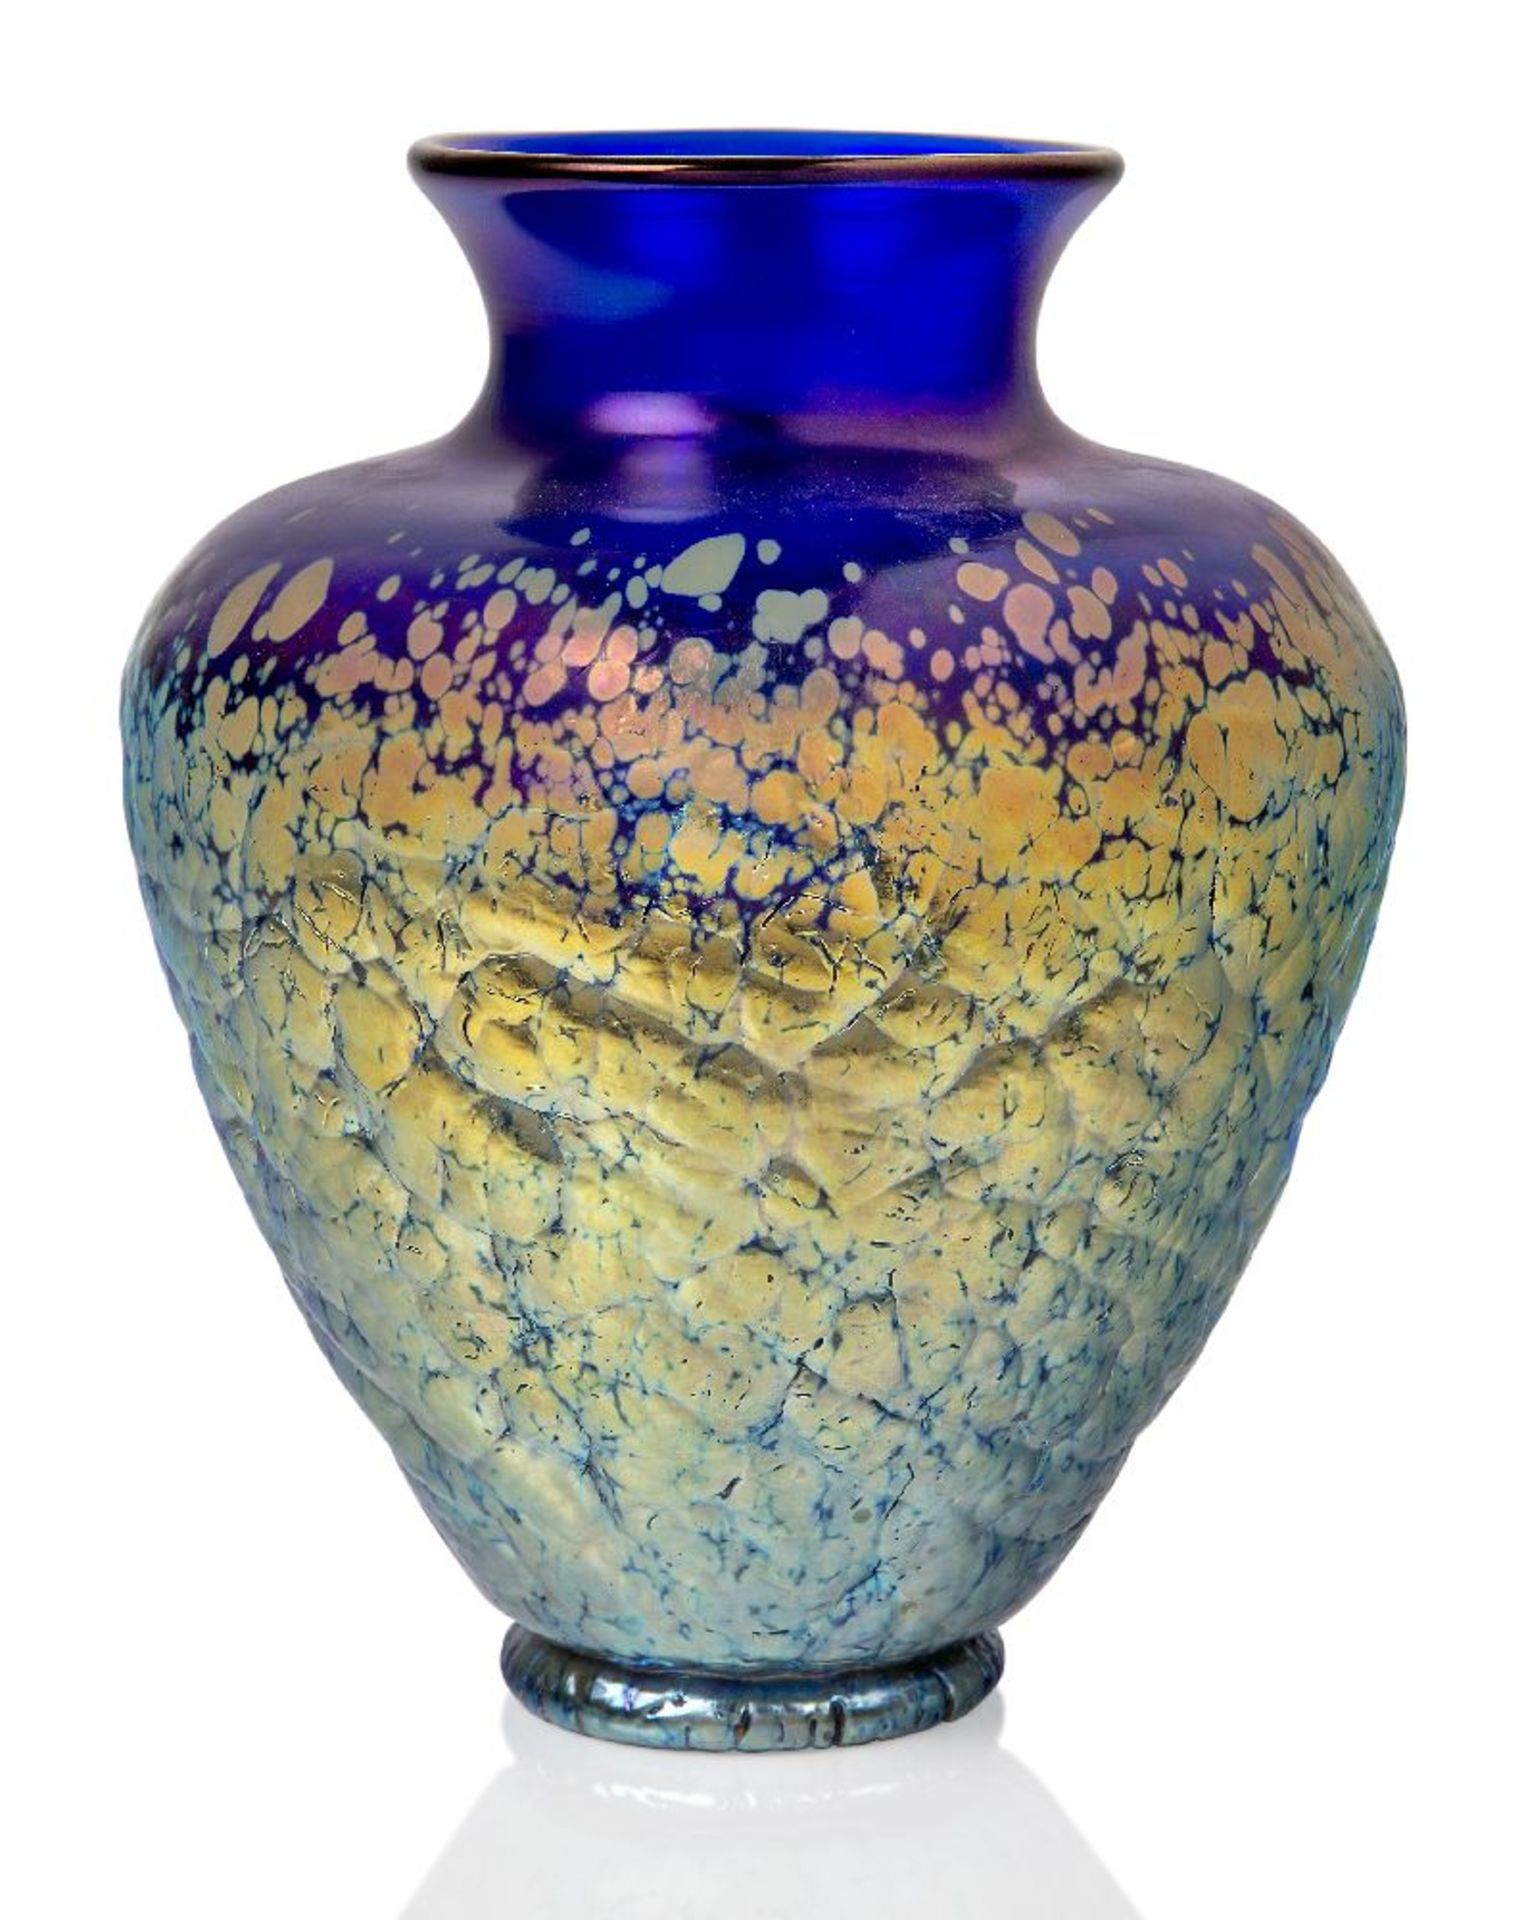 Loetz (Austrian), an iridescent and textured dark blue Phaenomen glass vase, c.1900, PG 377,